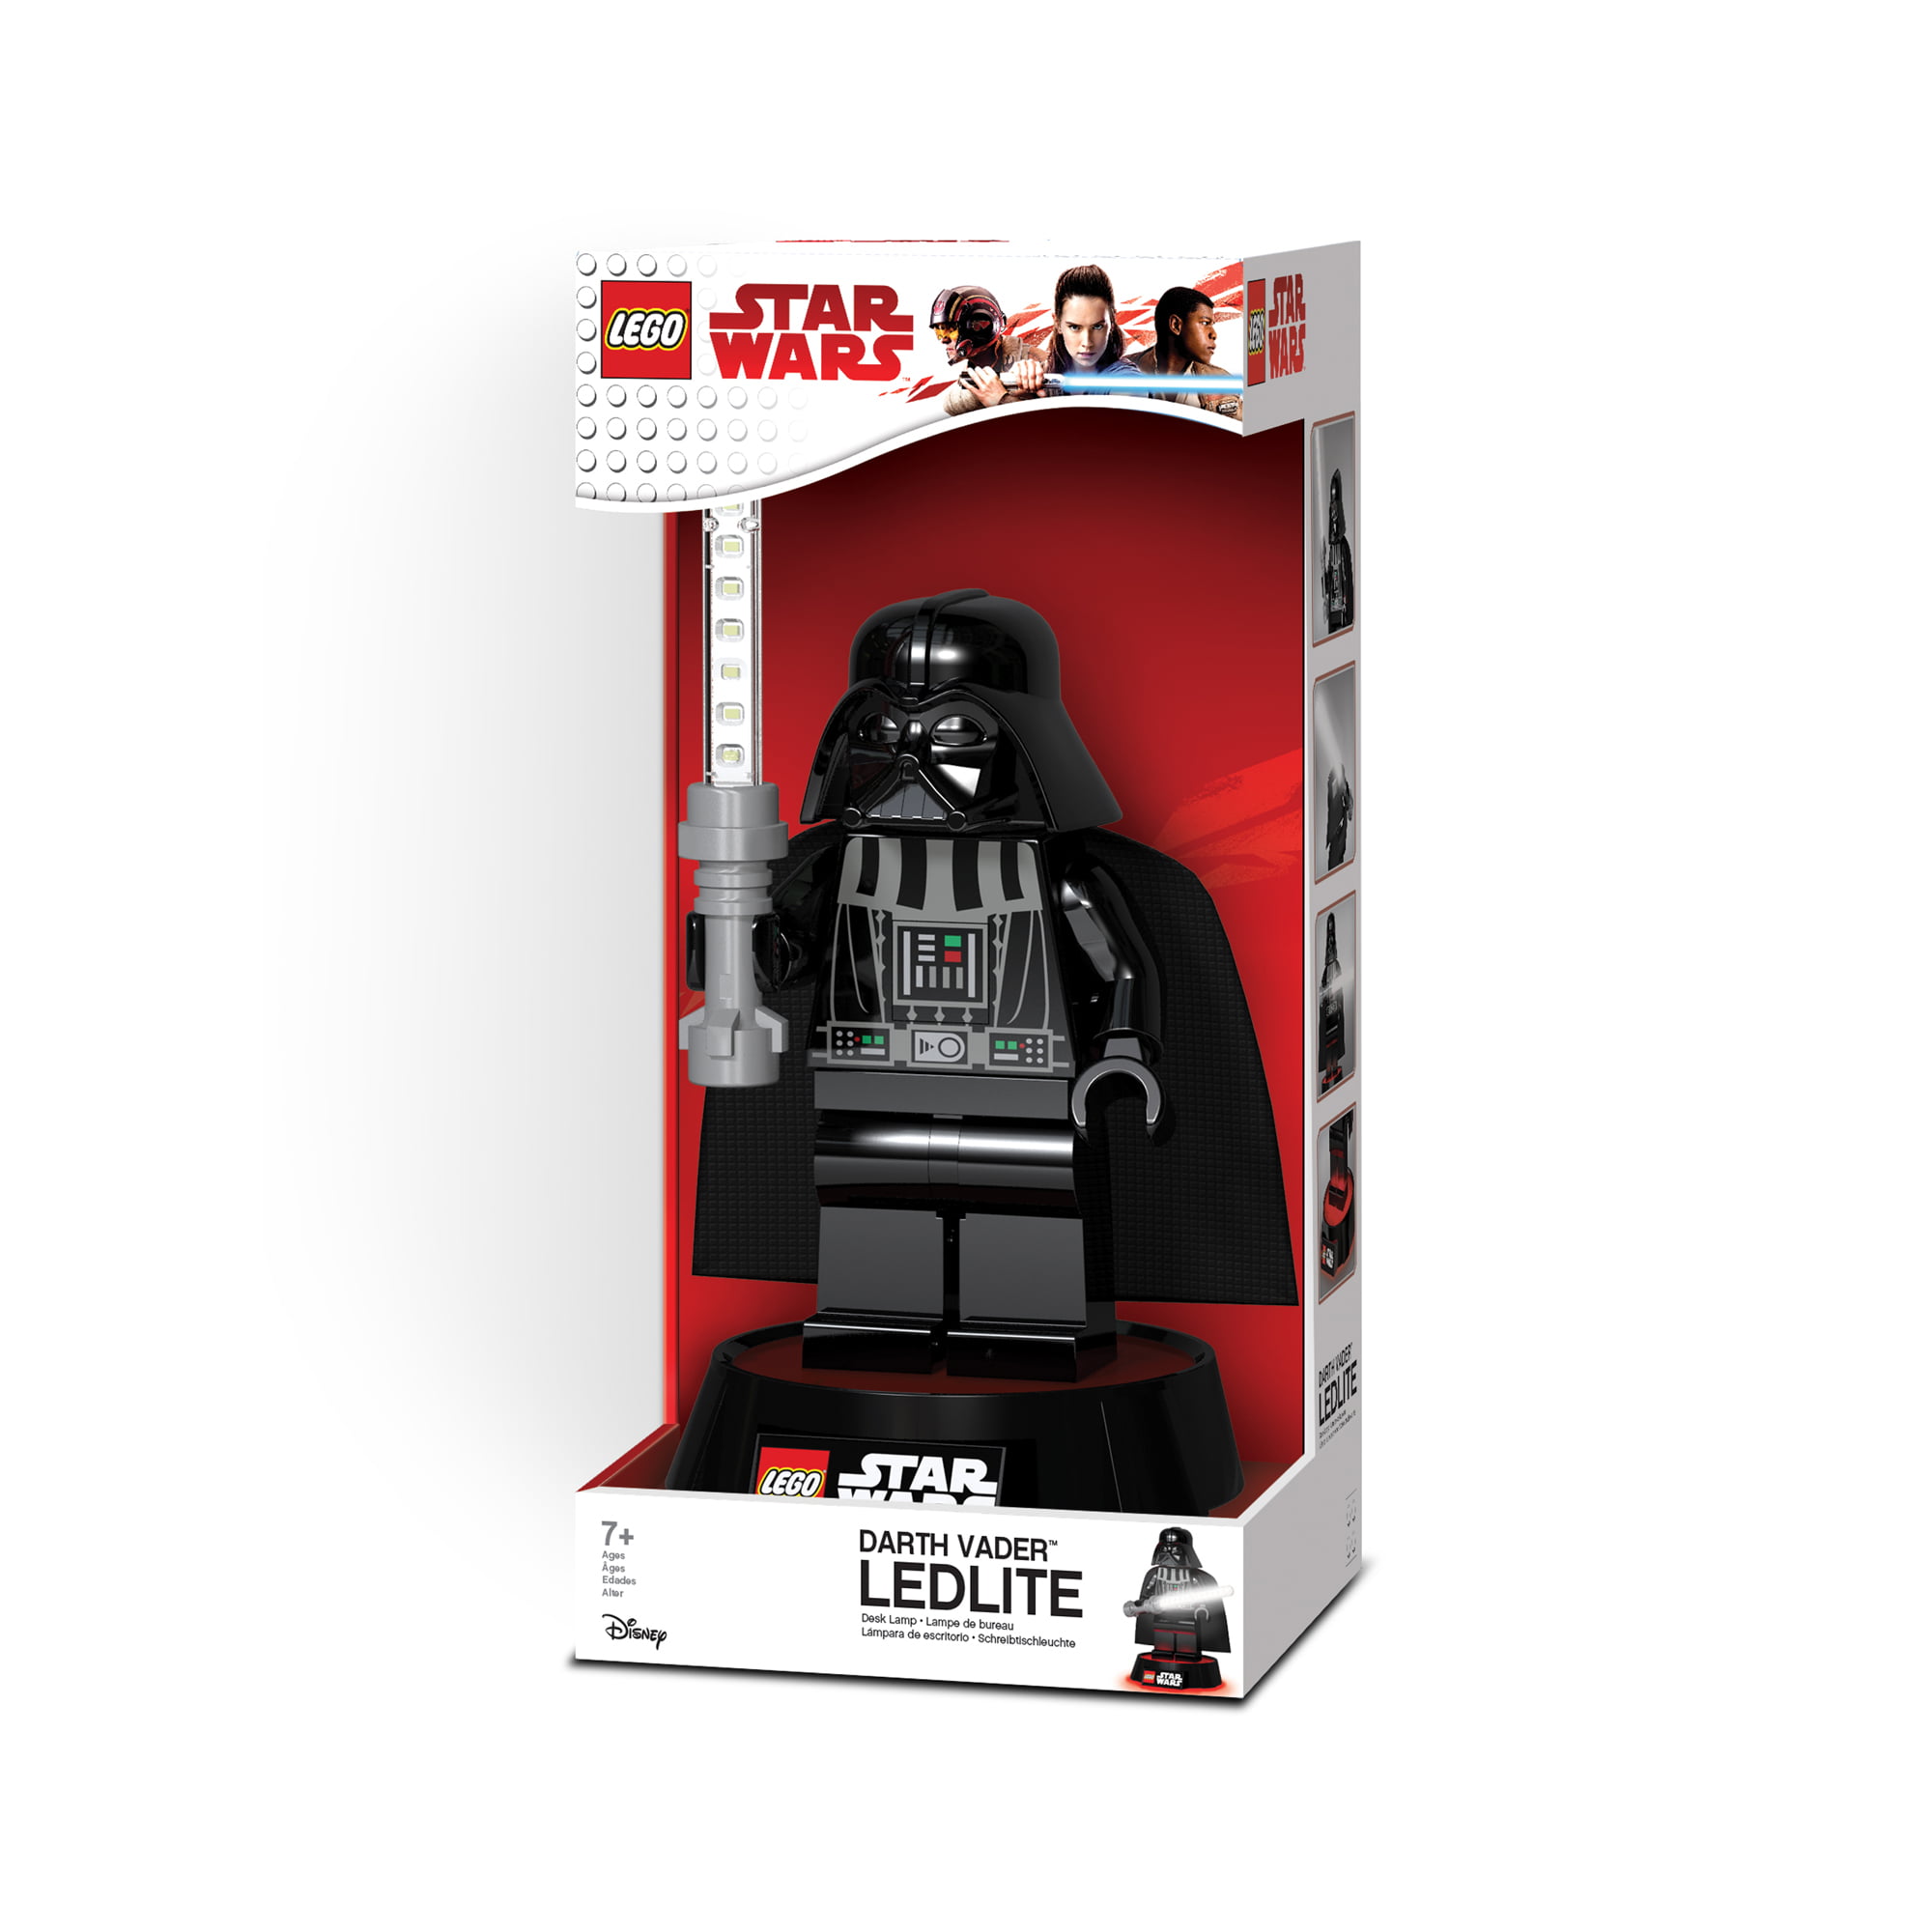 Lego Star Wars Darth Vader Desk Lamp, Darth Vader Table Lamp